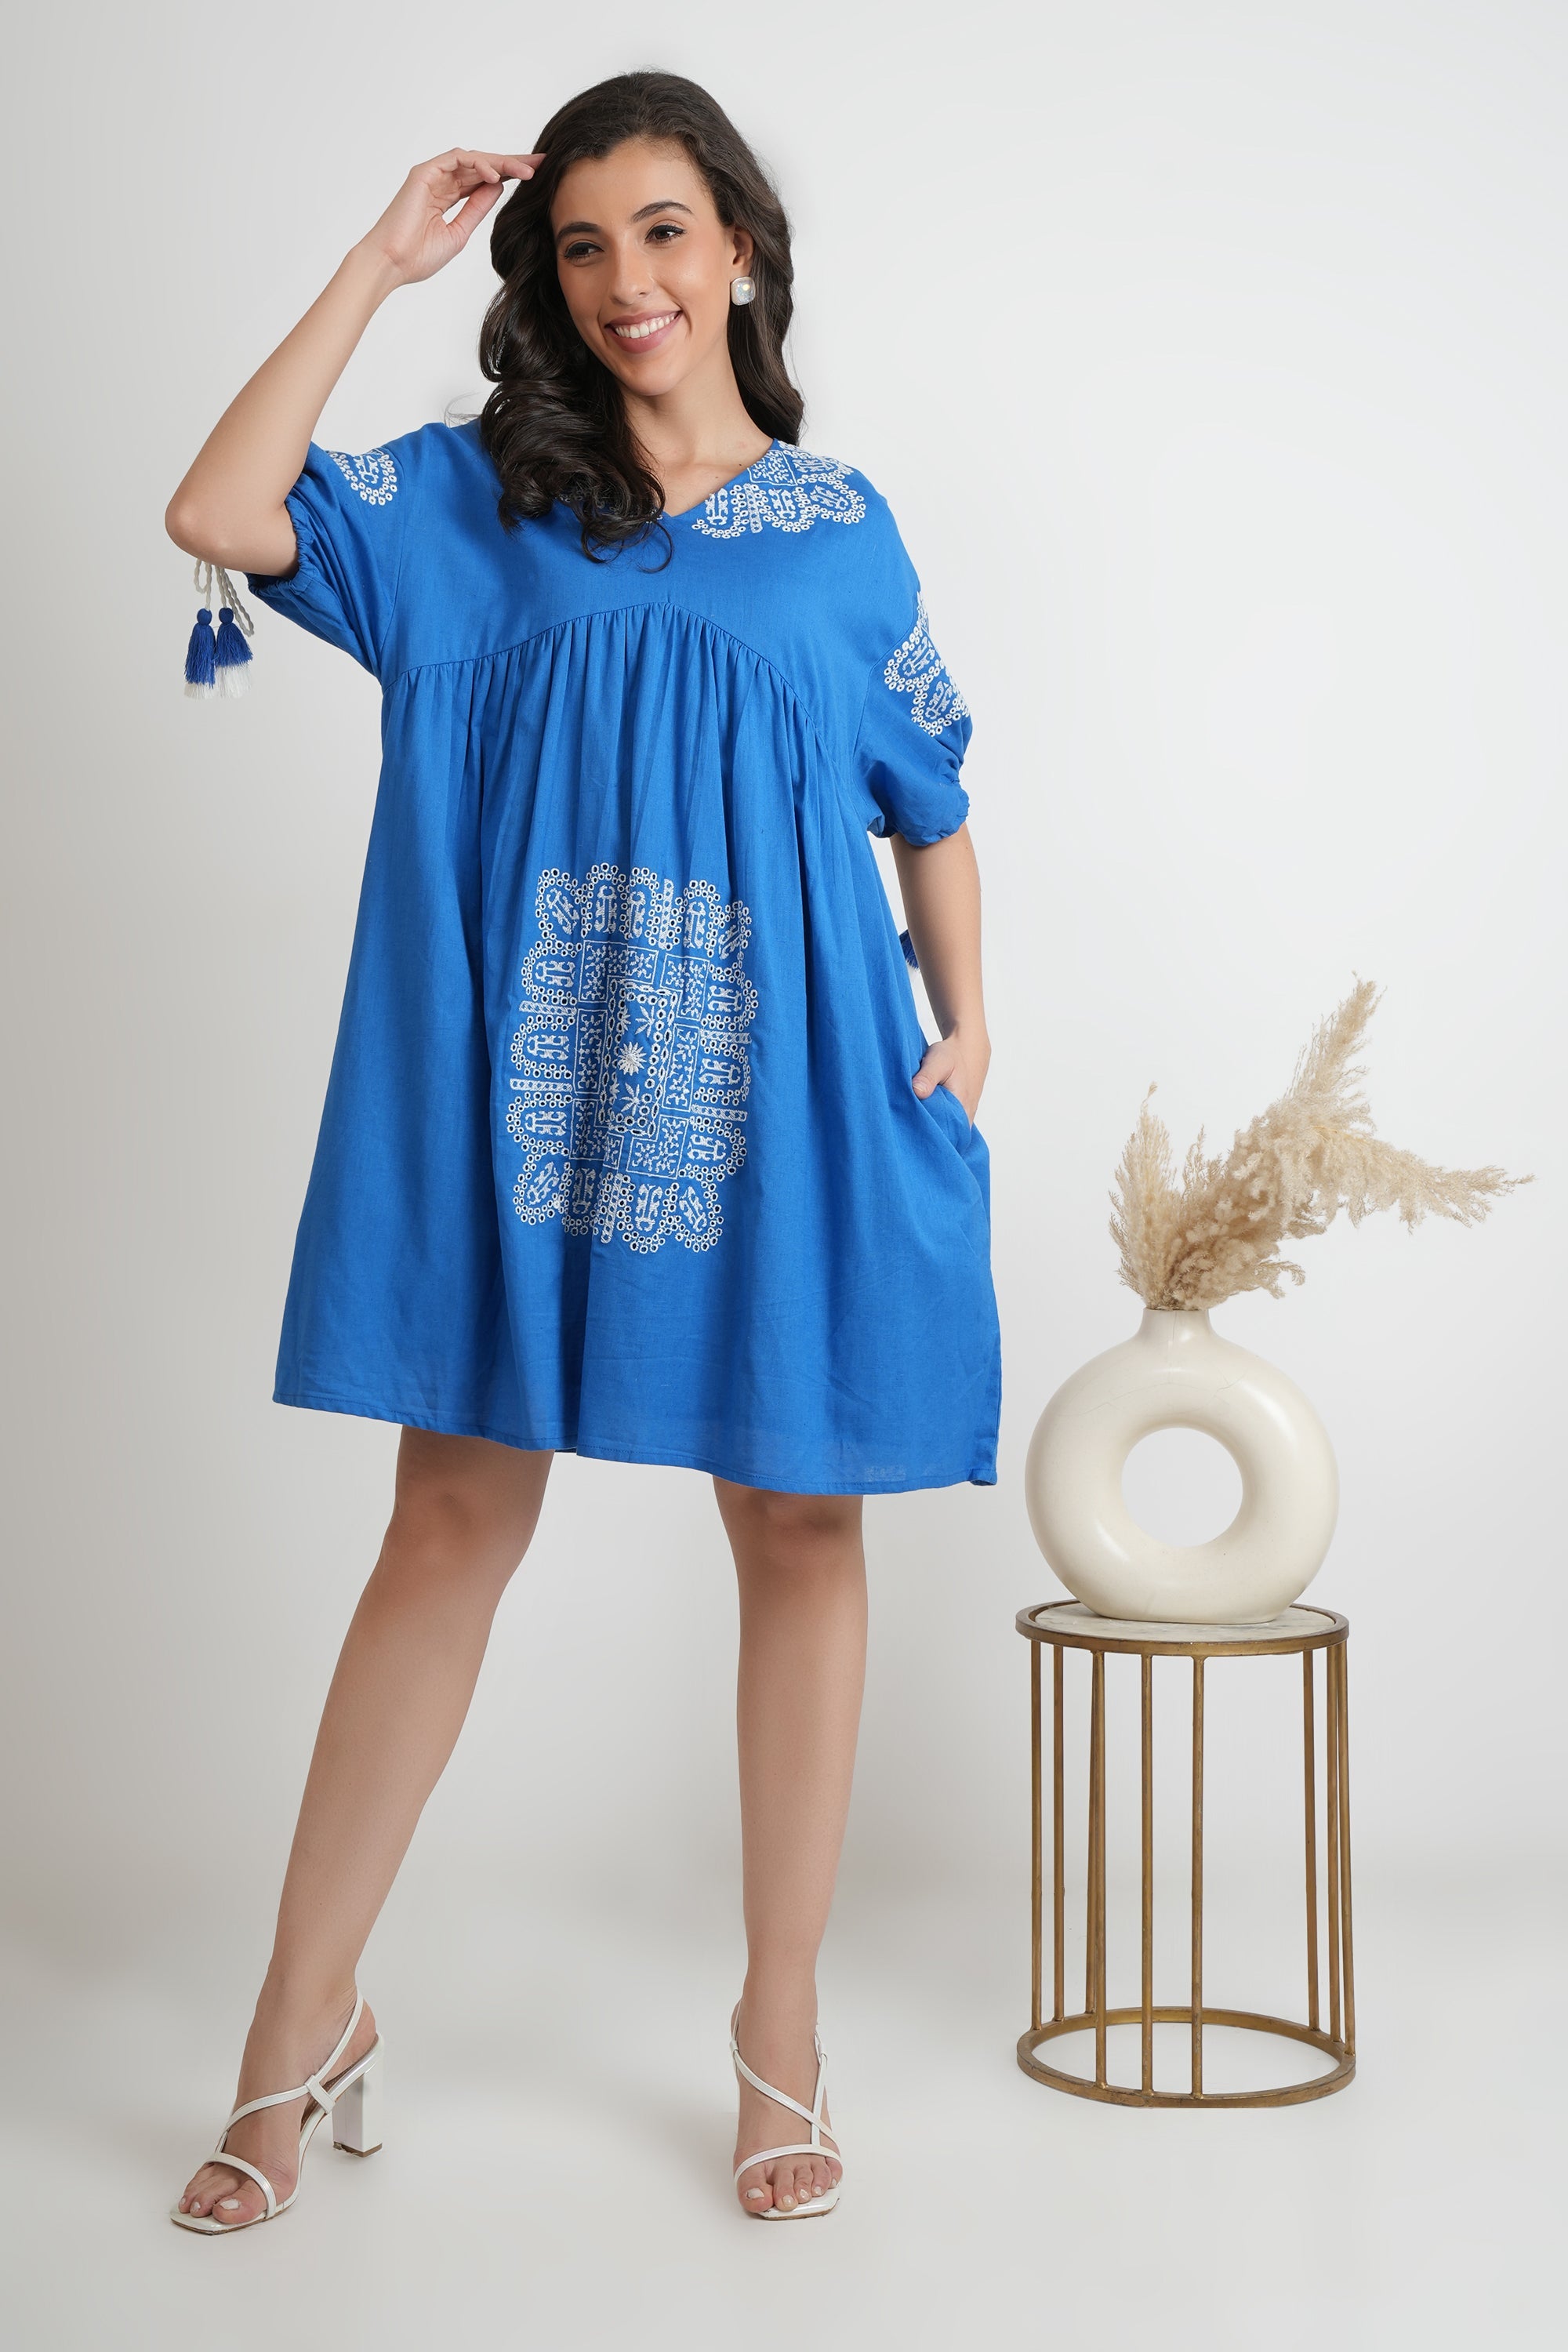 Cotton Knee-Length Muumuu Dress for Women